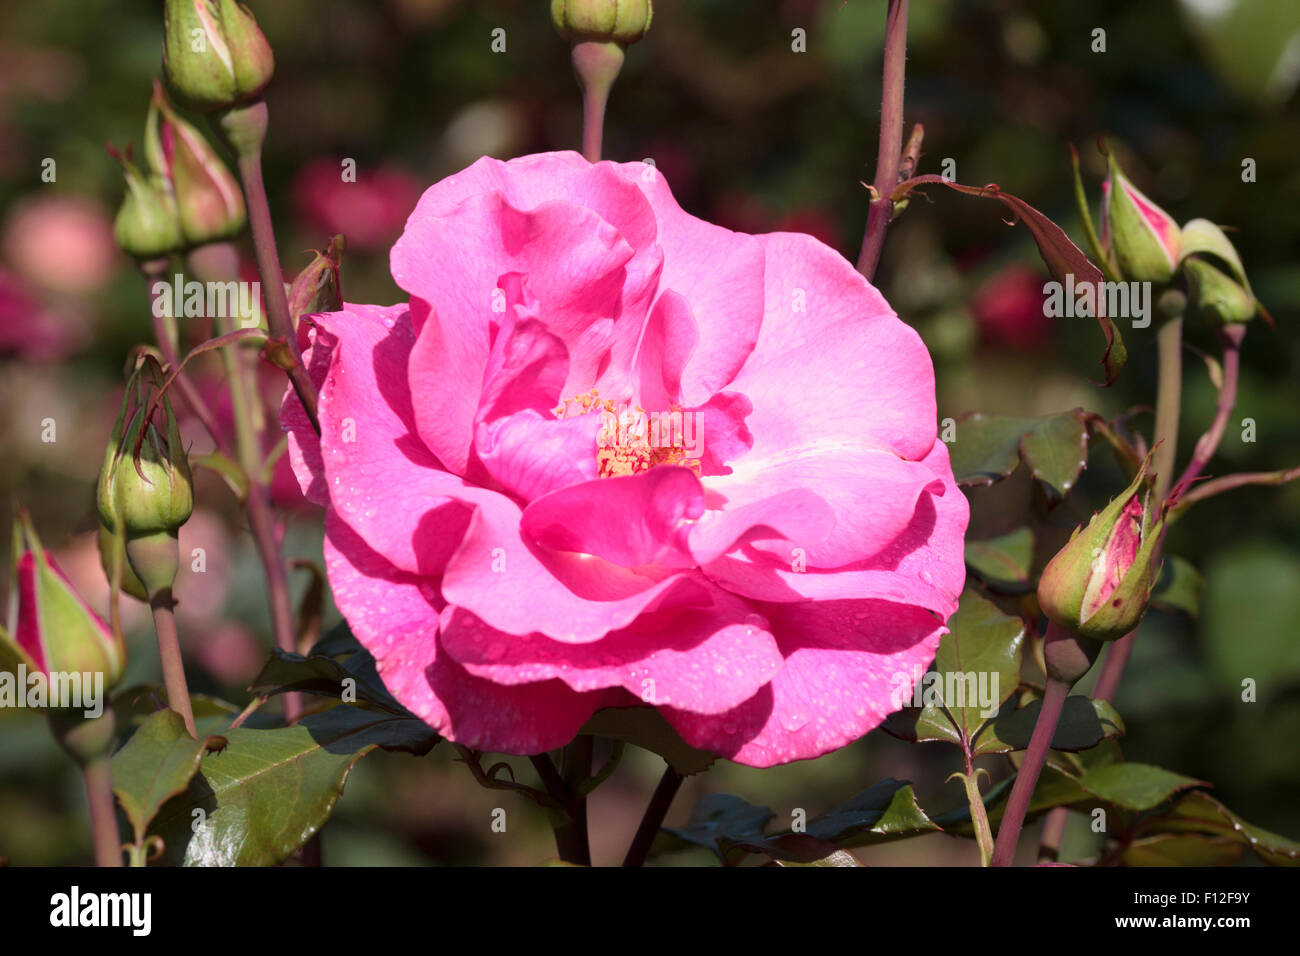 Flower and buds of the floribunda rose, Rosa 'Romance' Stock Photo